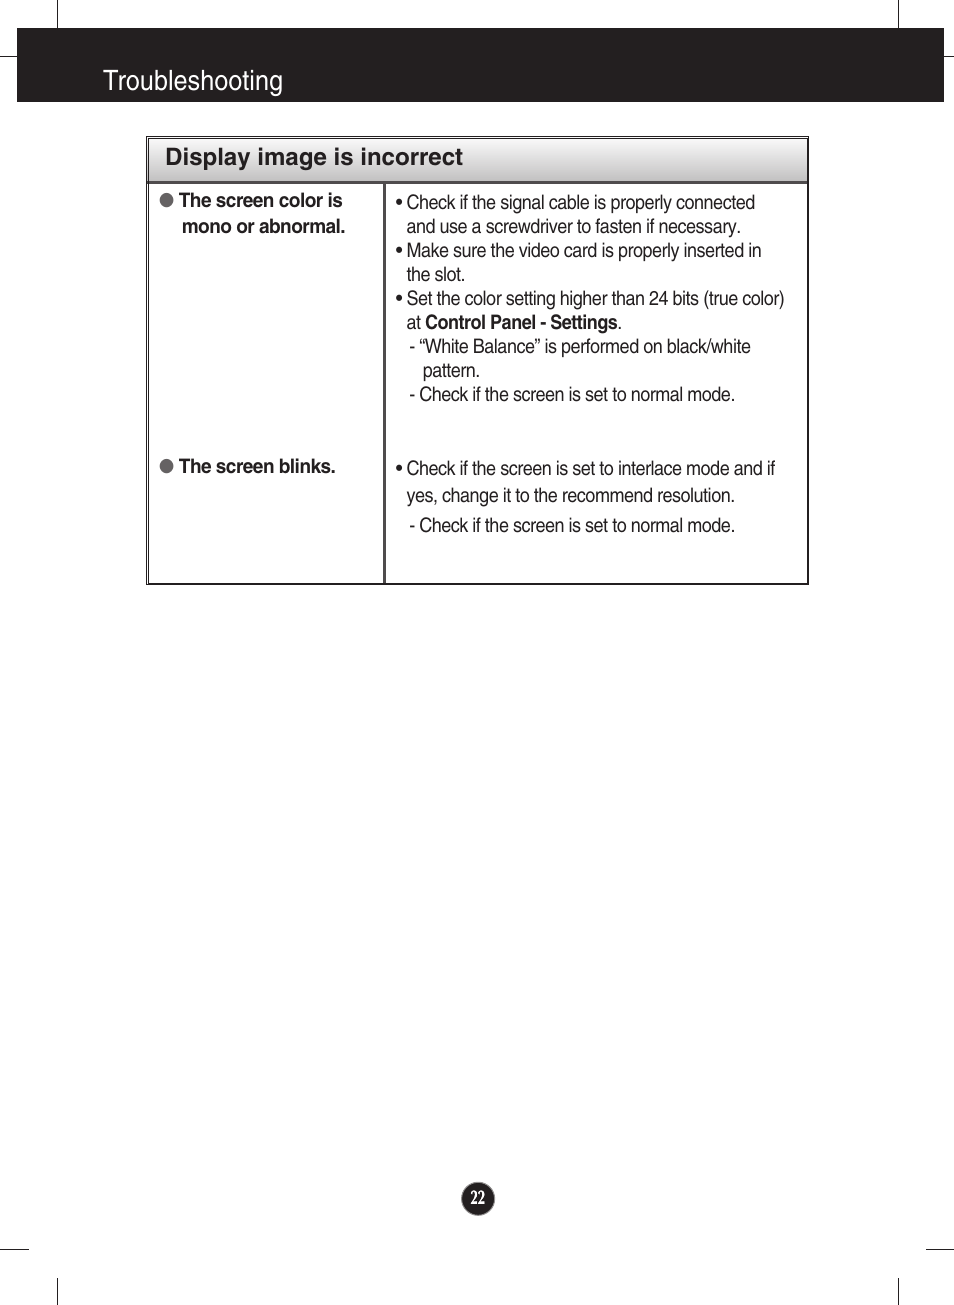 Troubleshooting | LG Network Monitor N194WA User Manual | Page 24 / 30